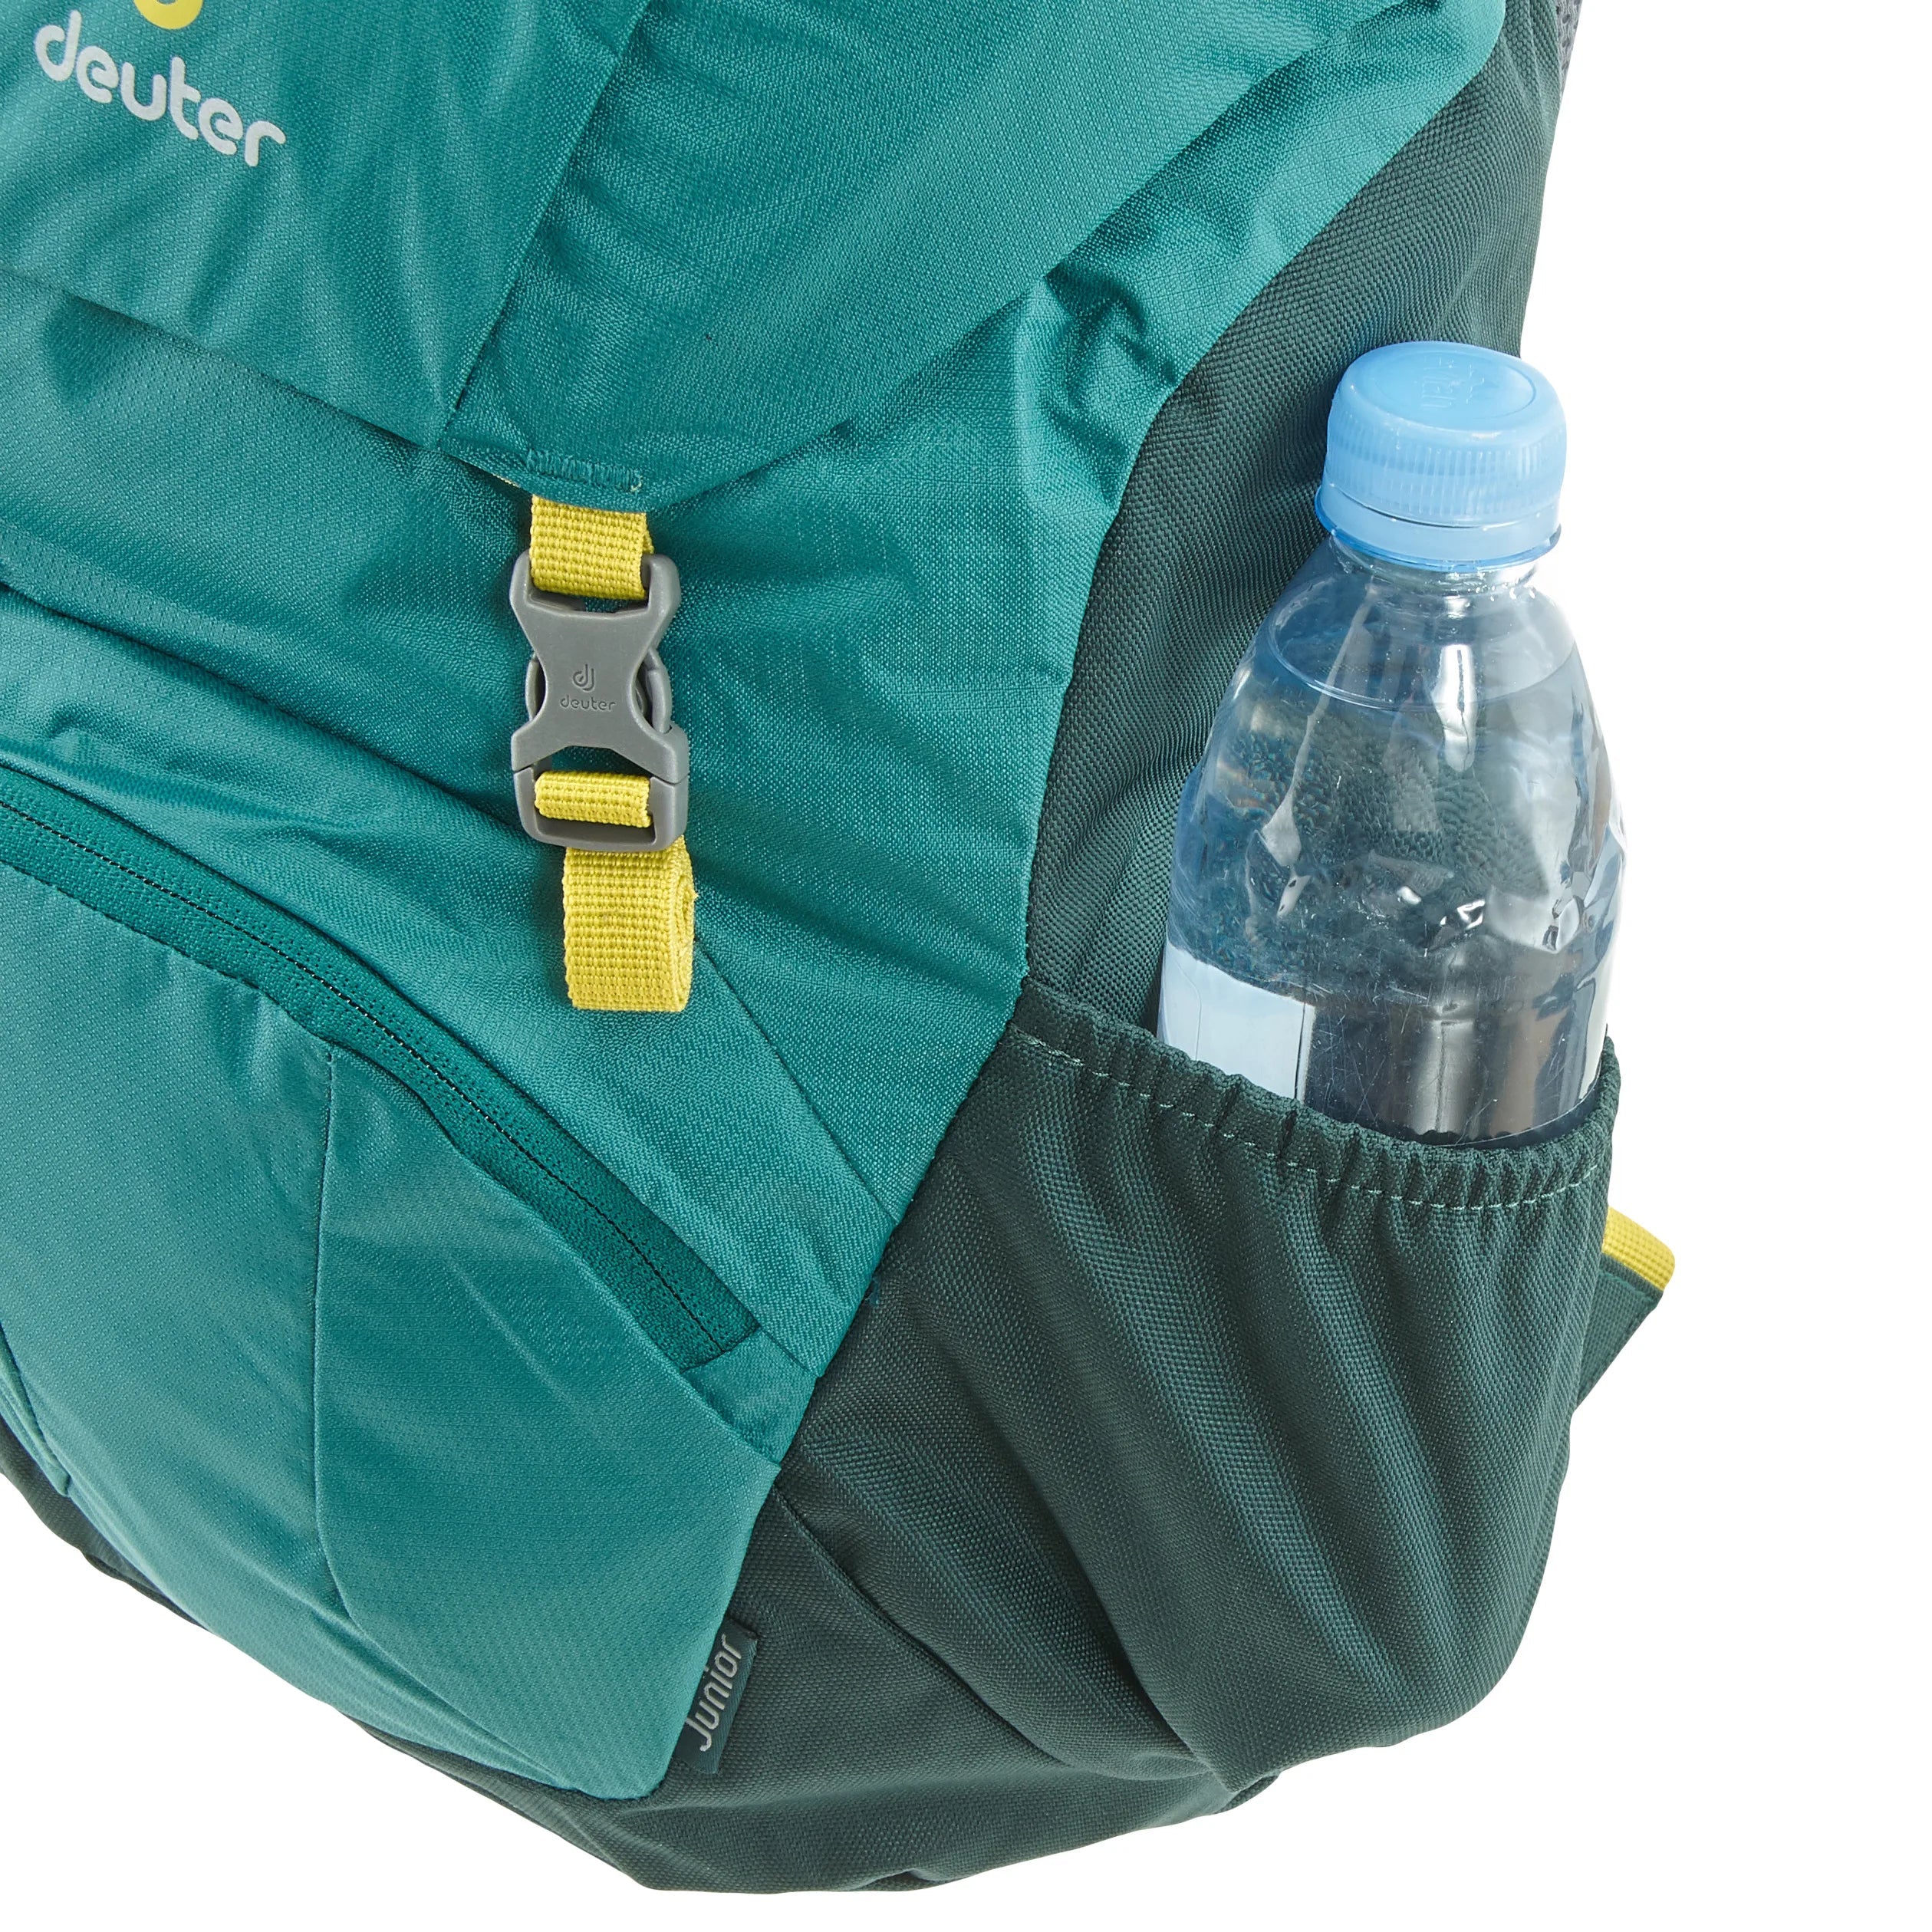 Deuter Daypack Junior children's backpack 43 cm - Deepsea-Dustblue